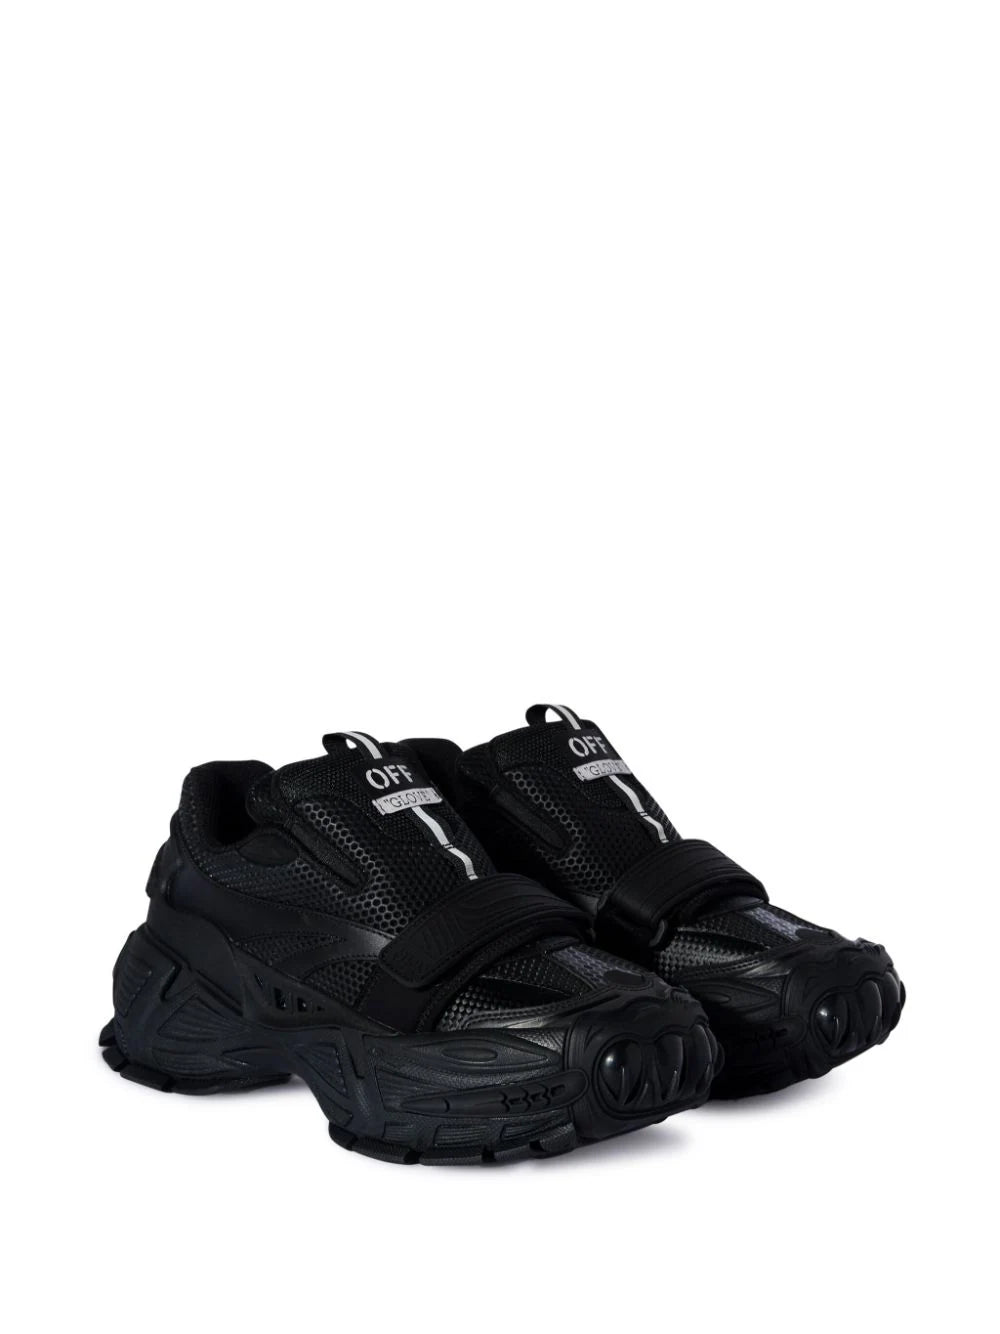 OFF-WHITE MEN Glove Slip On Low Top Leather Sneakers Black - MAISONDEFASHION.COM